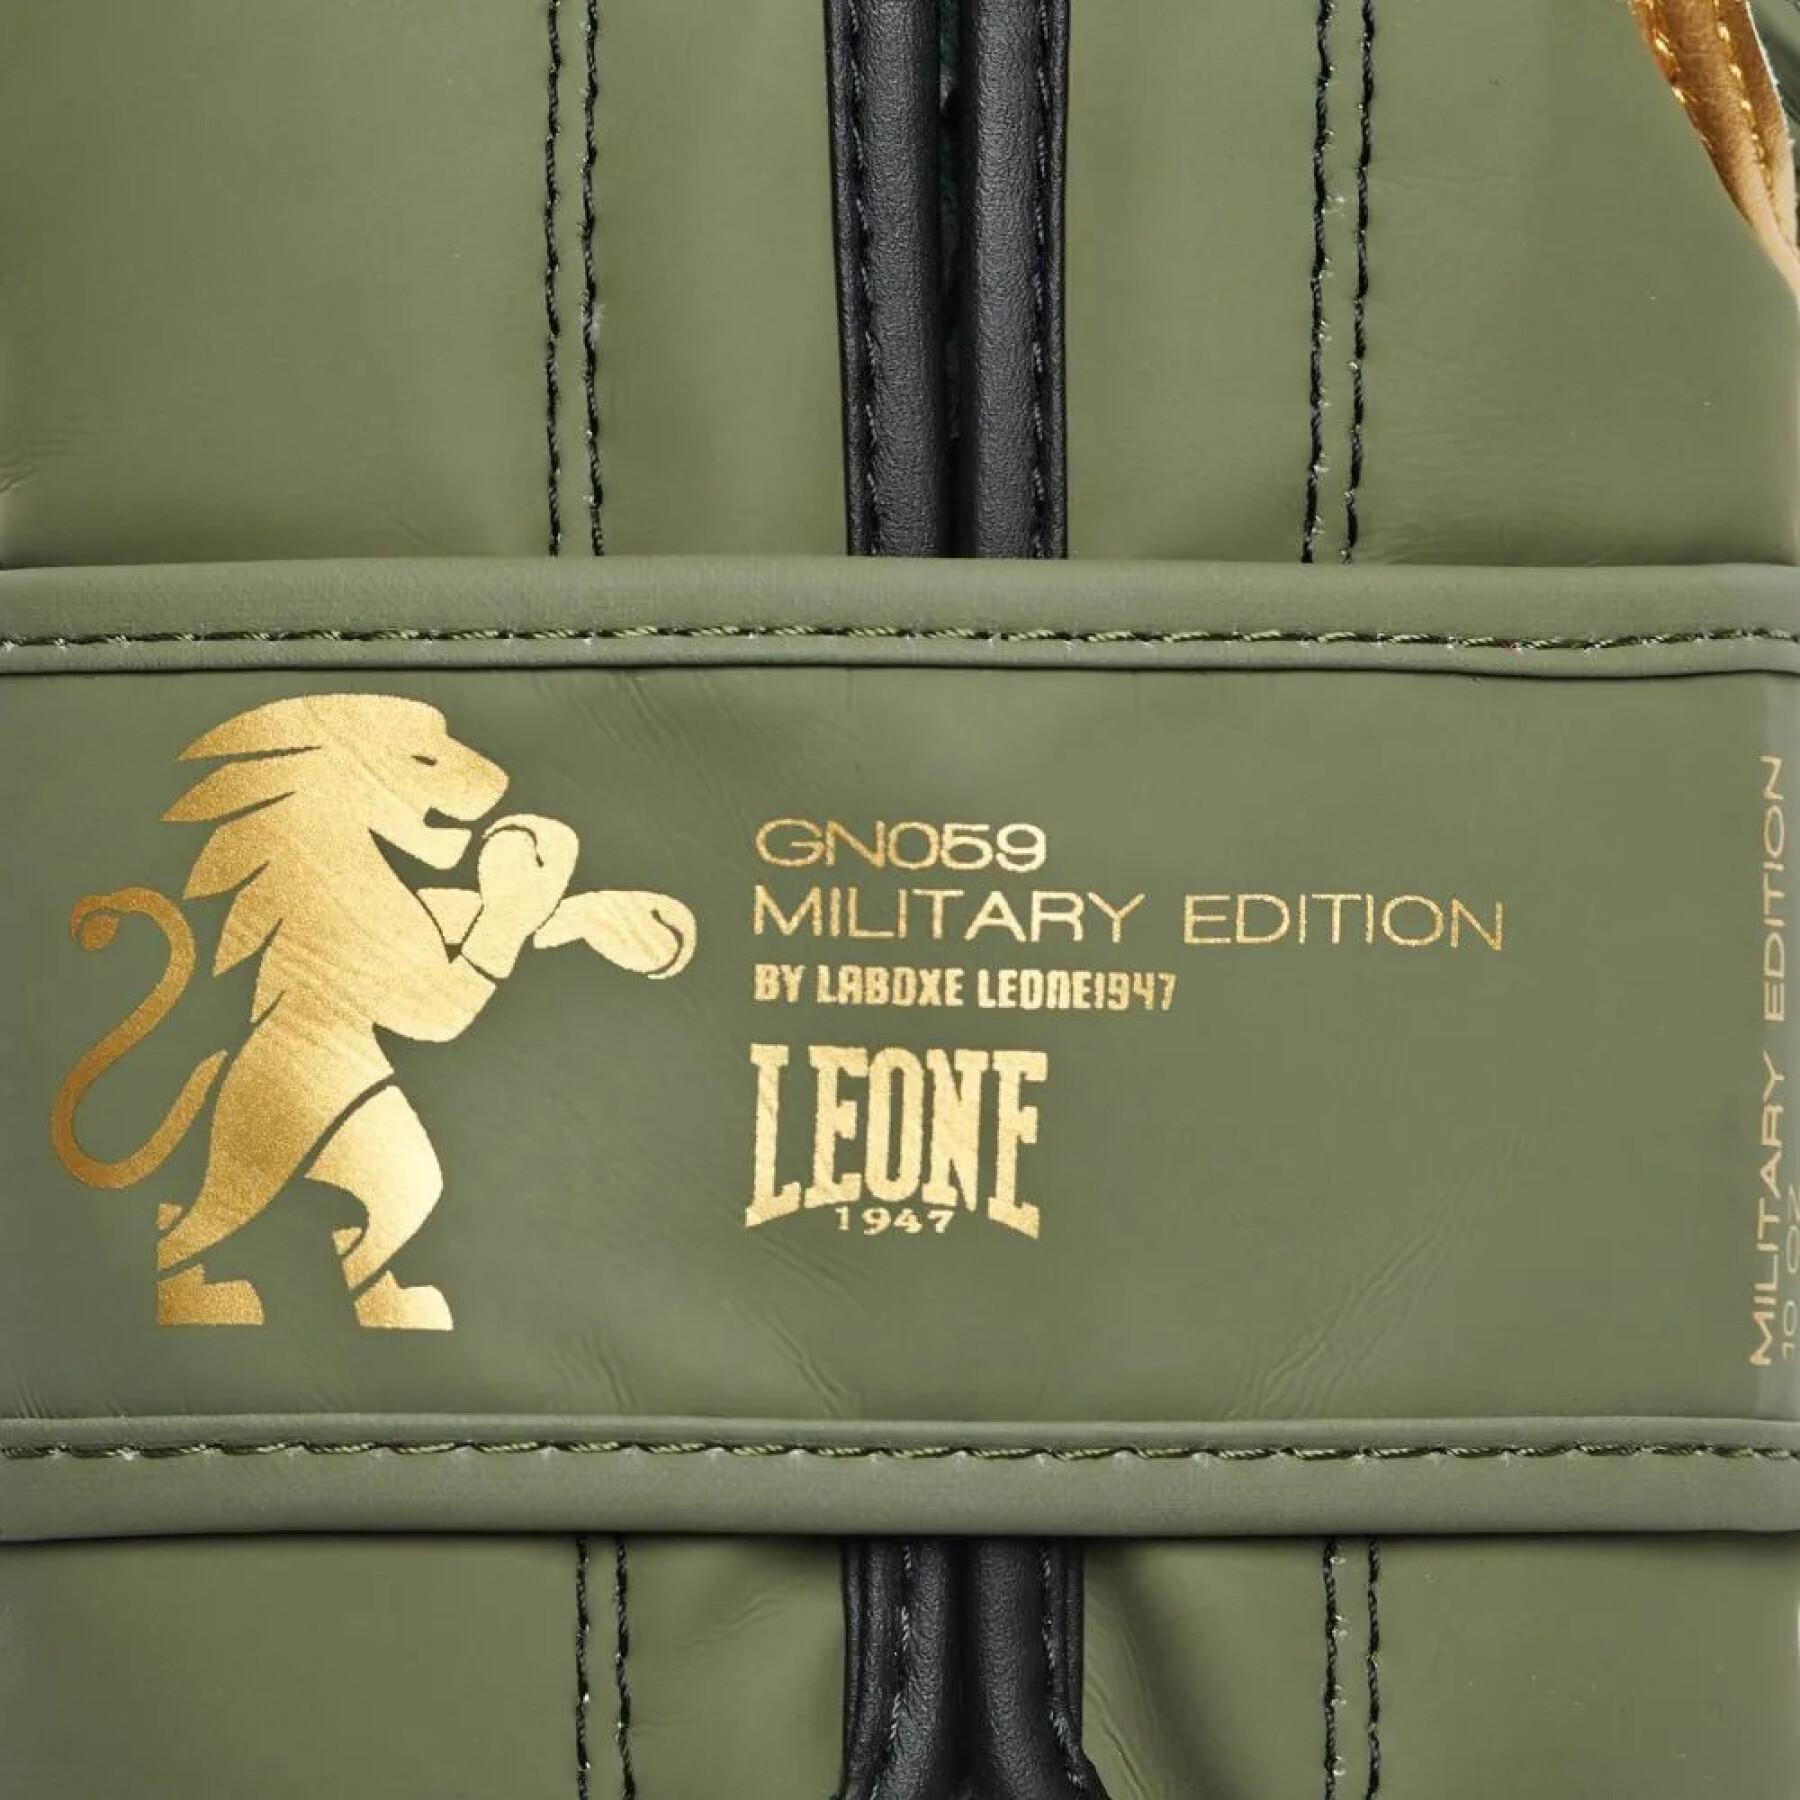 Gants de boxe Leone Military Edition 10 oz